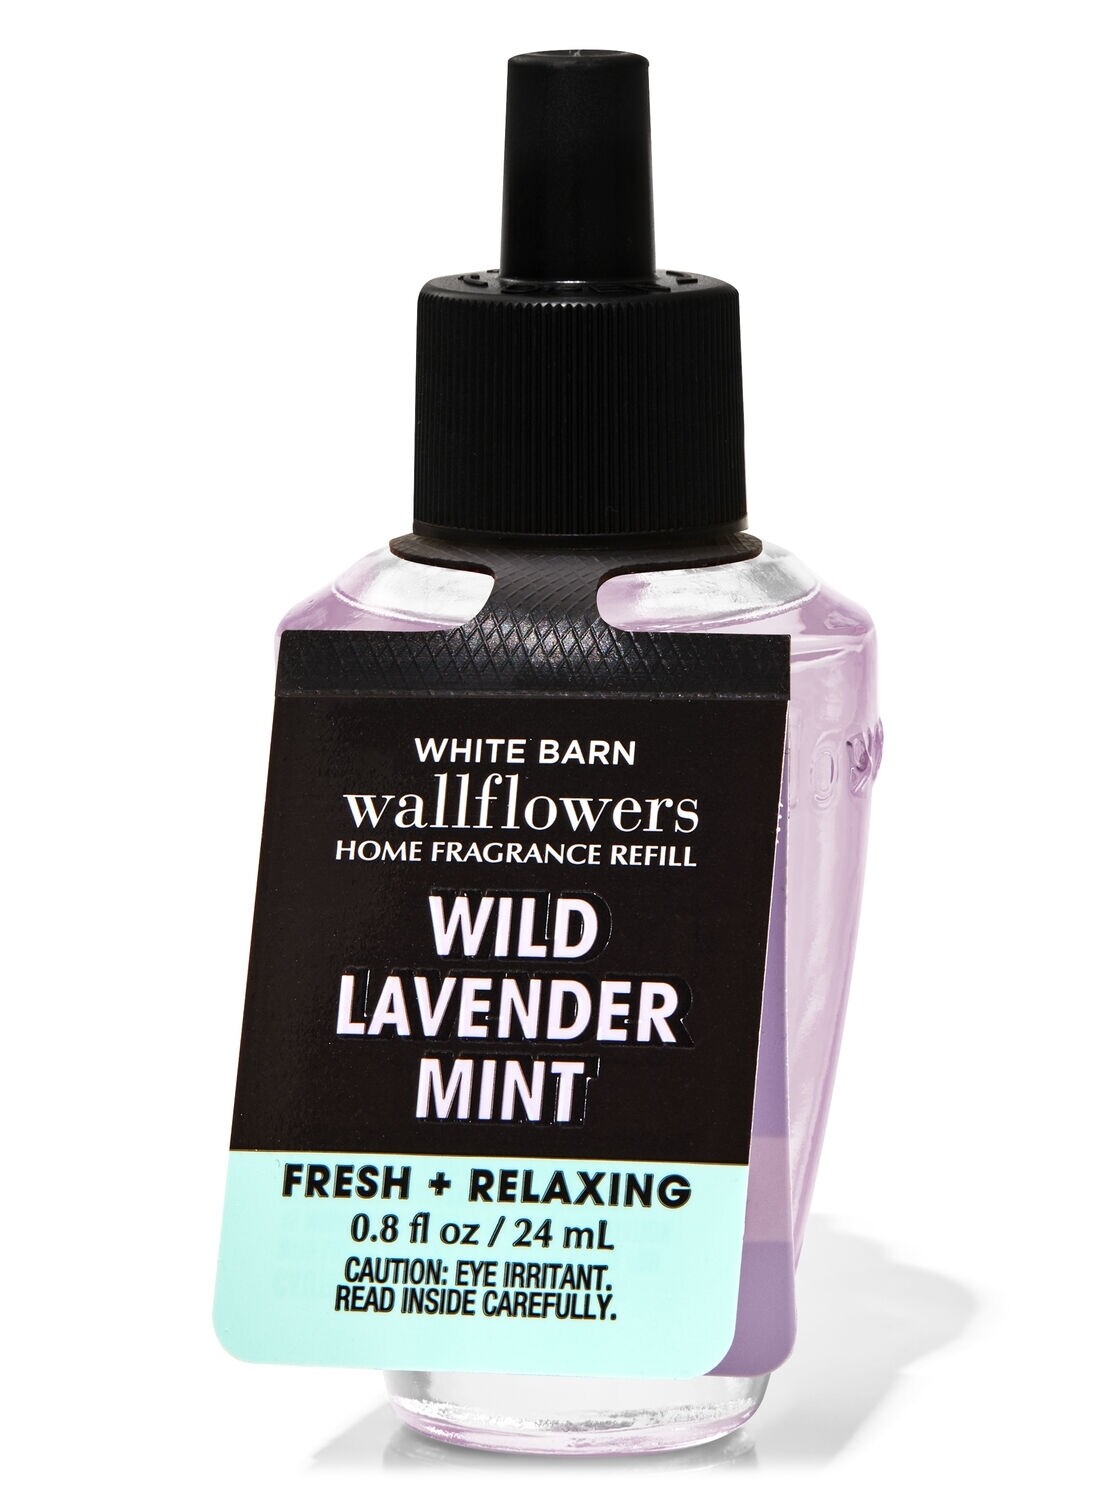 Bath and body works wallflower refill- wild lavender mint